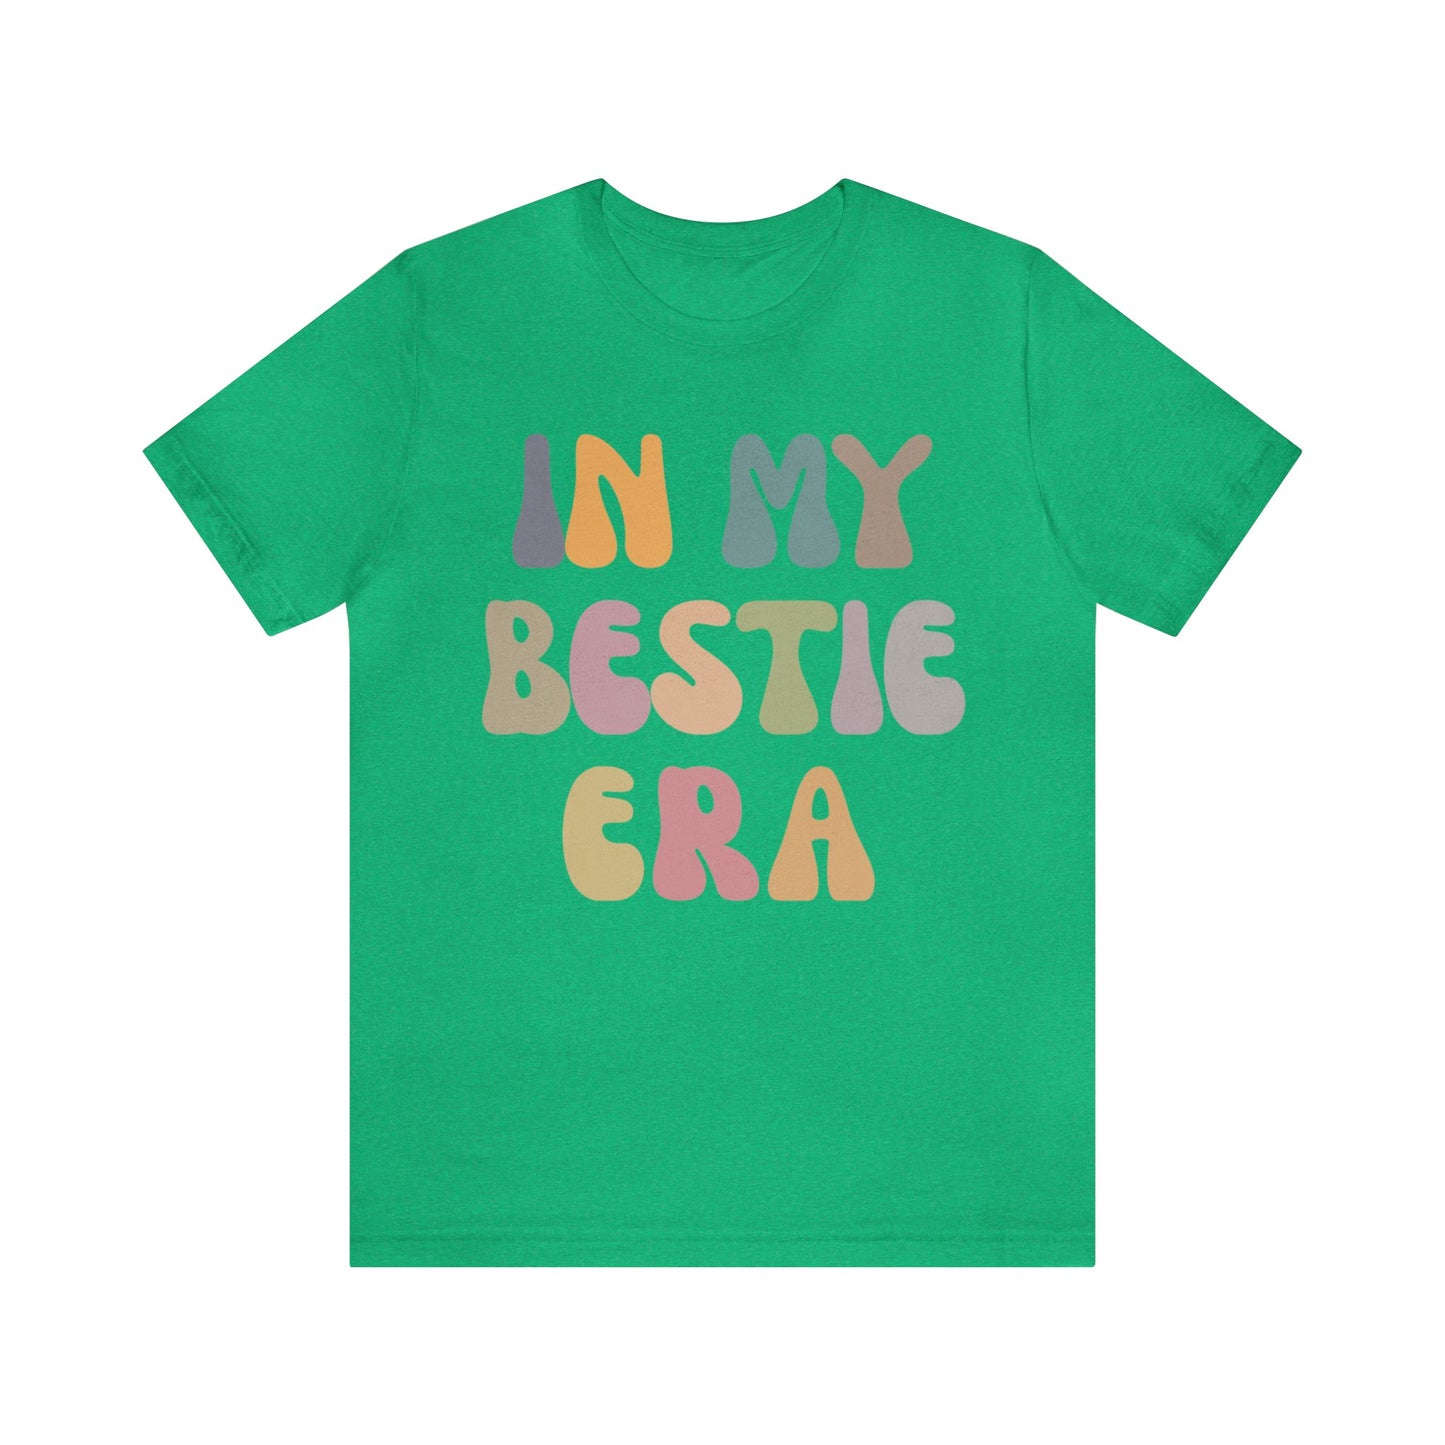 In My Bestie Era Shirt, Gift for Best Friend, BFF Shirt for Women, Friendship Gift, Best Friends Forever Shirt, Matching Bestie Shirt, T1426